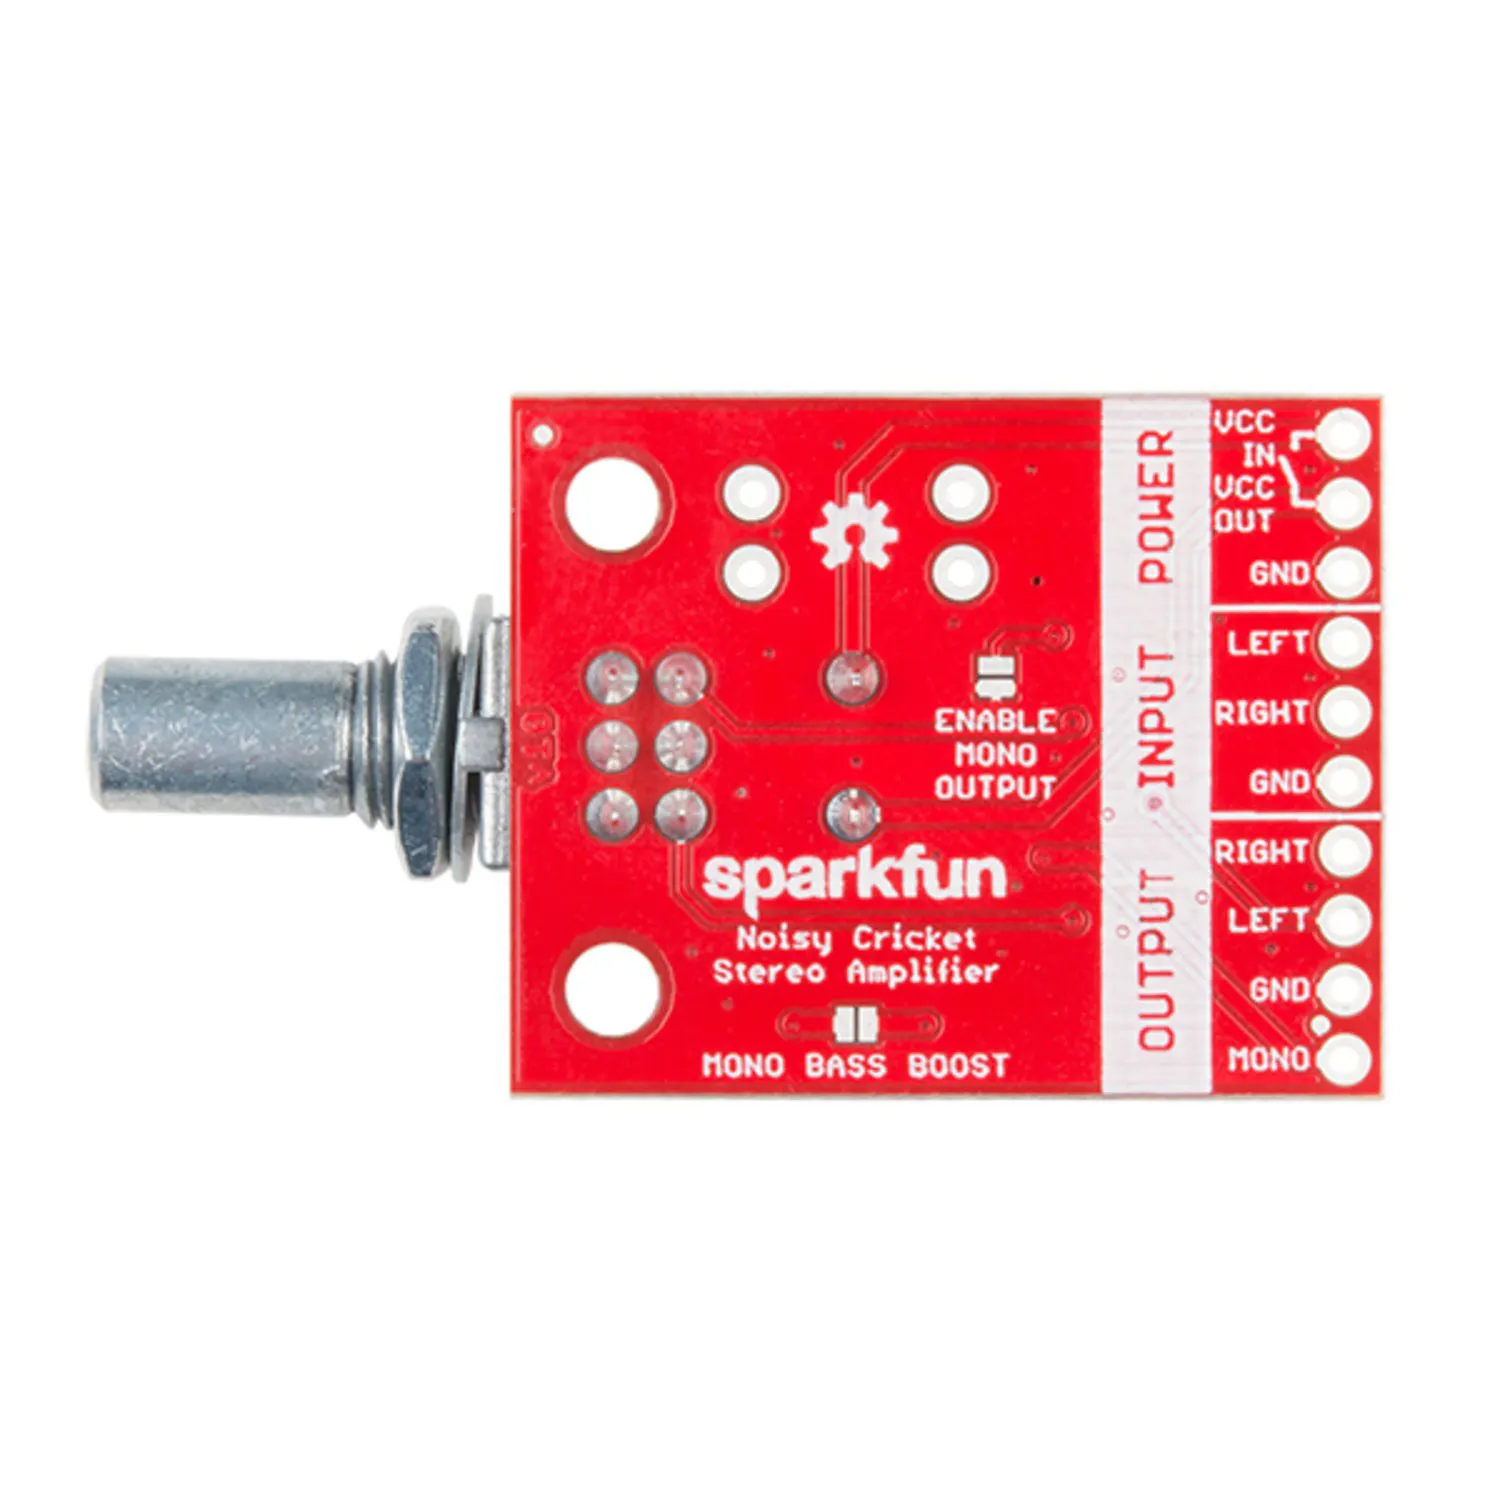 Photo of SparkFun Noisy Cricket Stereo Amplifier - 1.5W